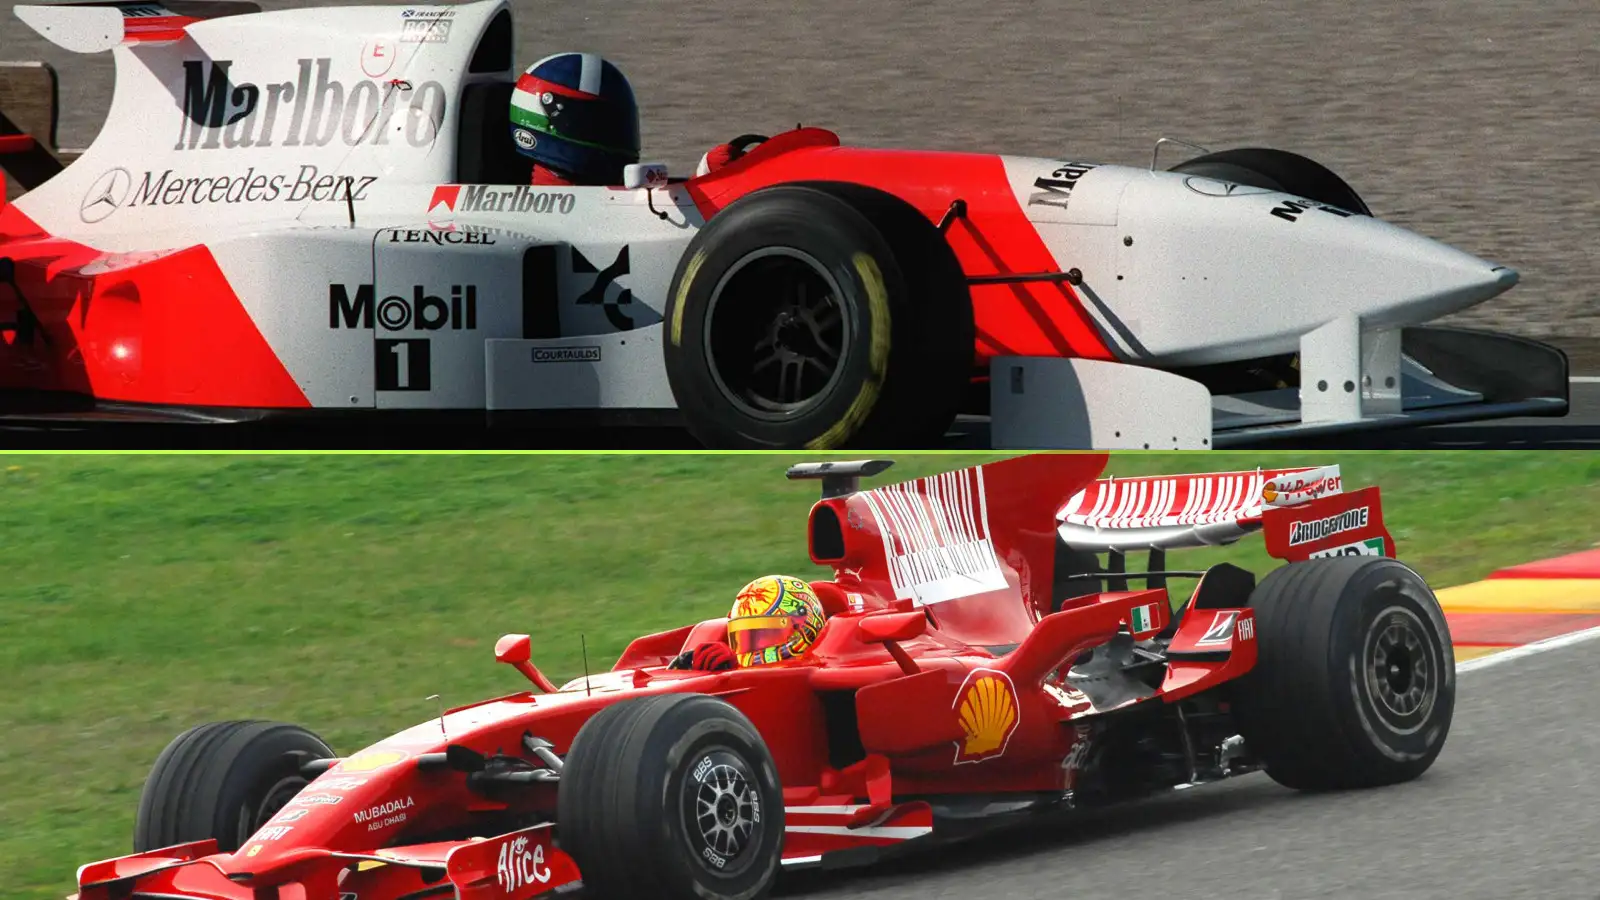 Dario Franchitti tests for McLaren, and Valentino Rossi tests for Ferrari.